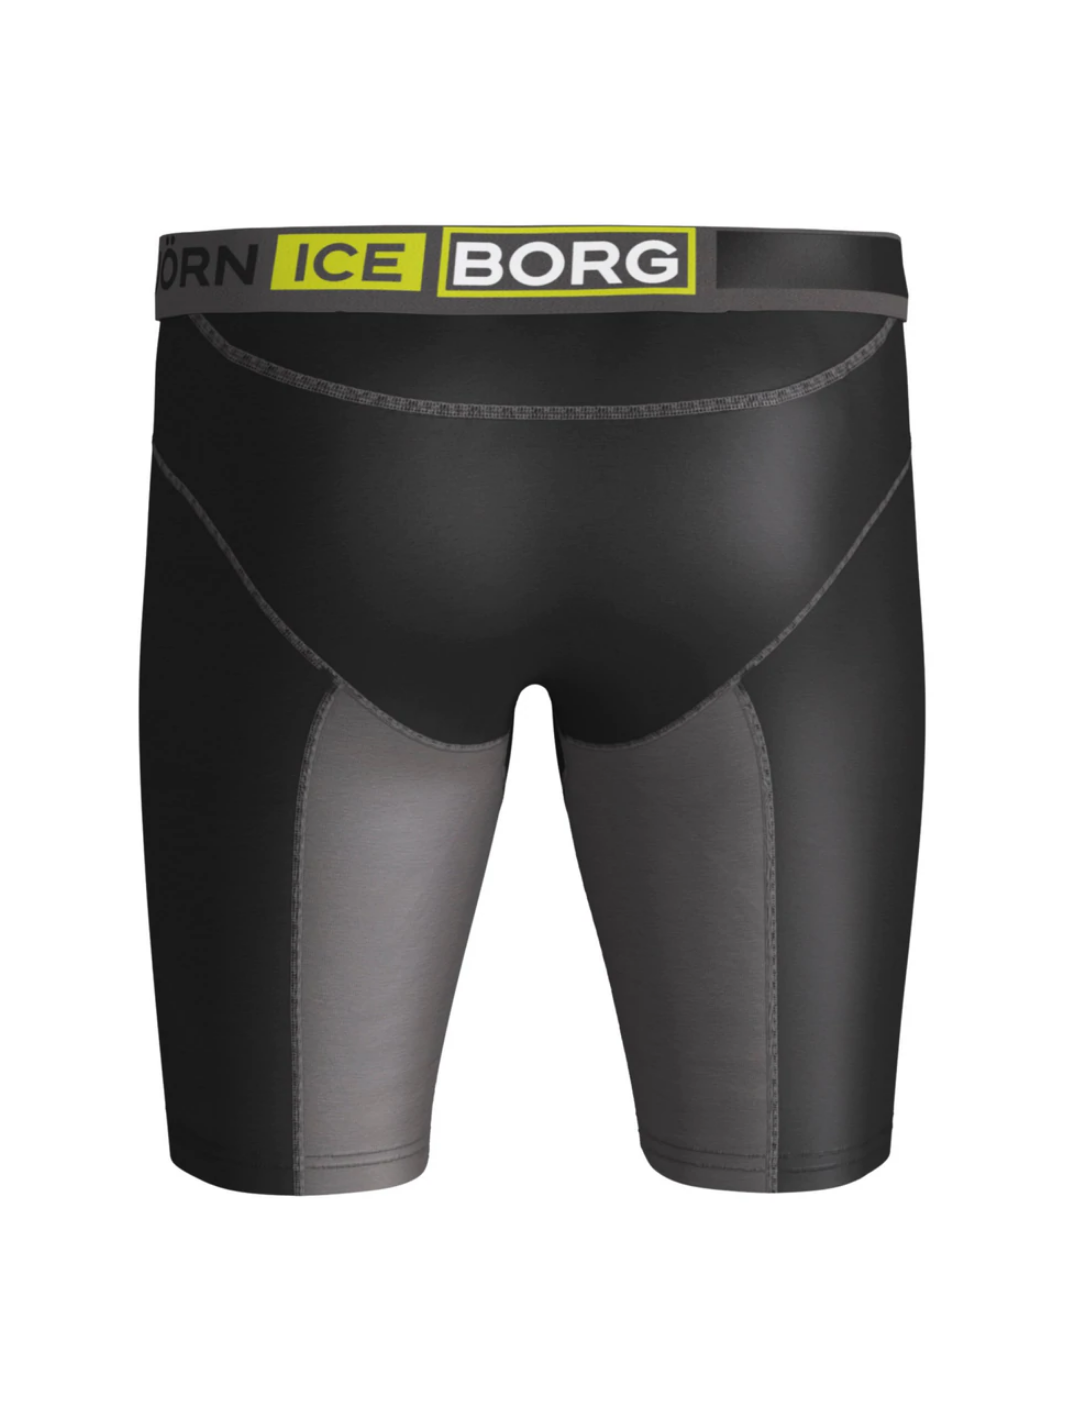 Sort Lang Björn Borg Ice Performance Boxershorts